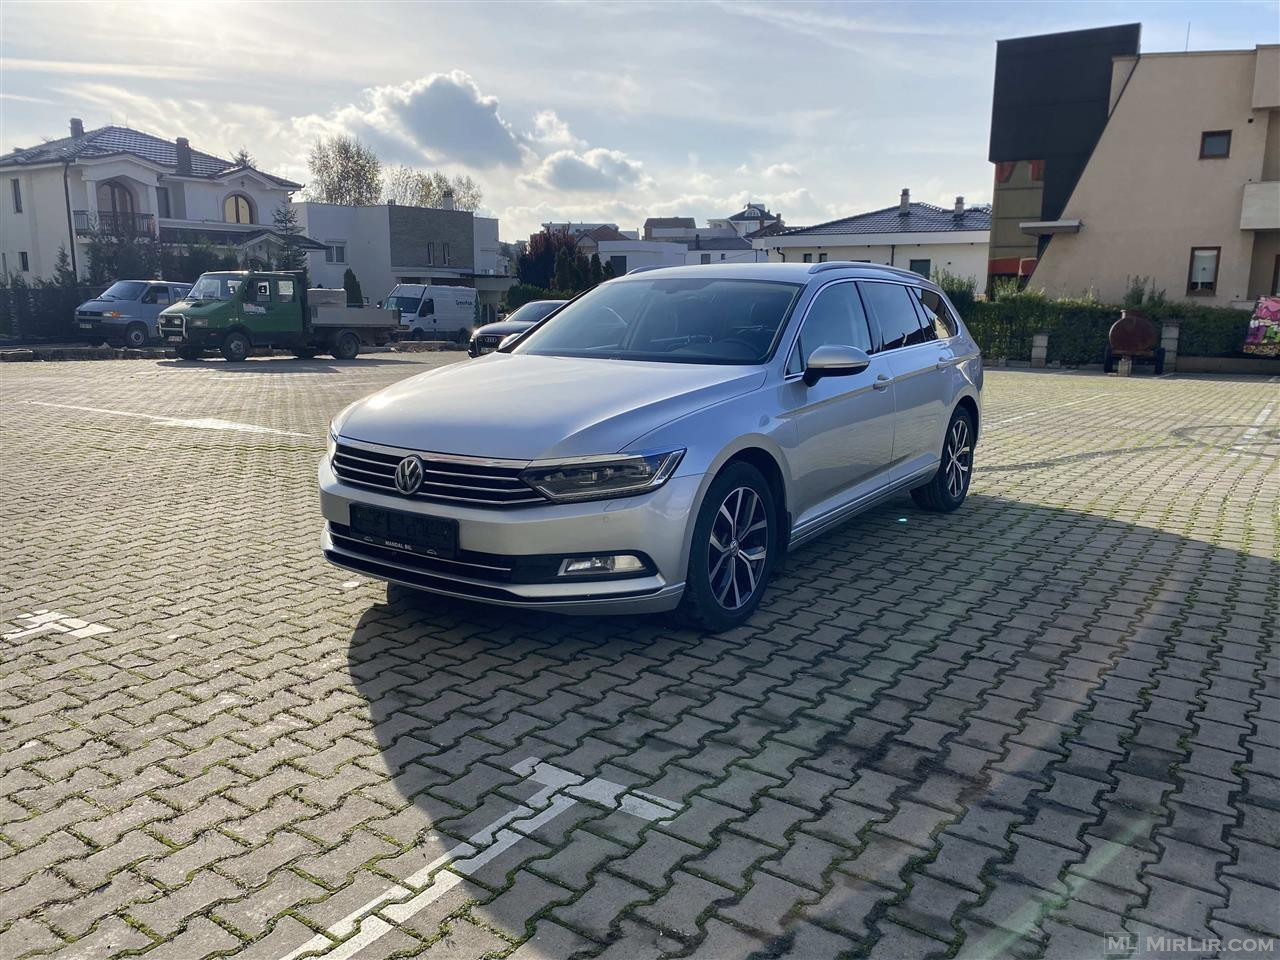 VW Pasat B8 2019 DSG